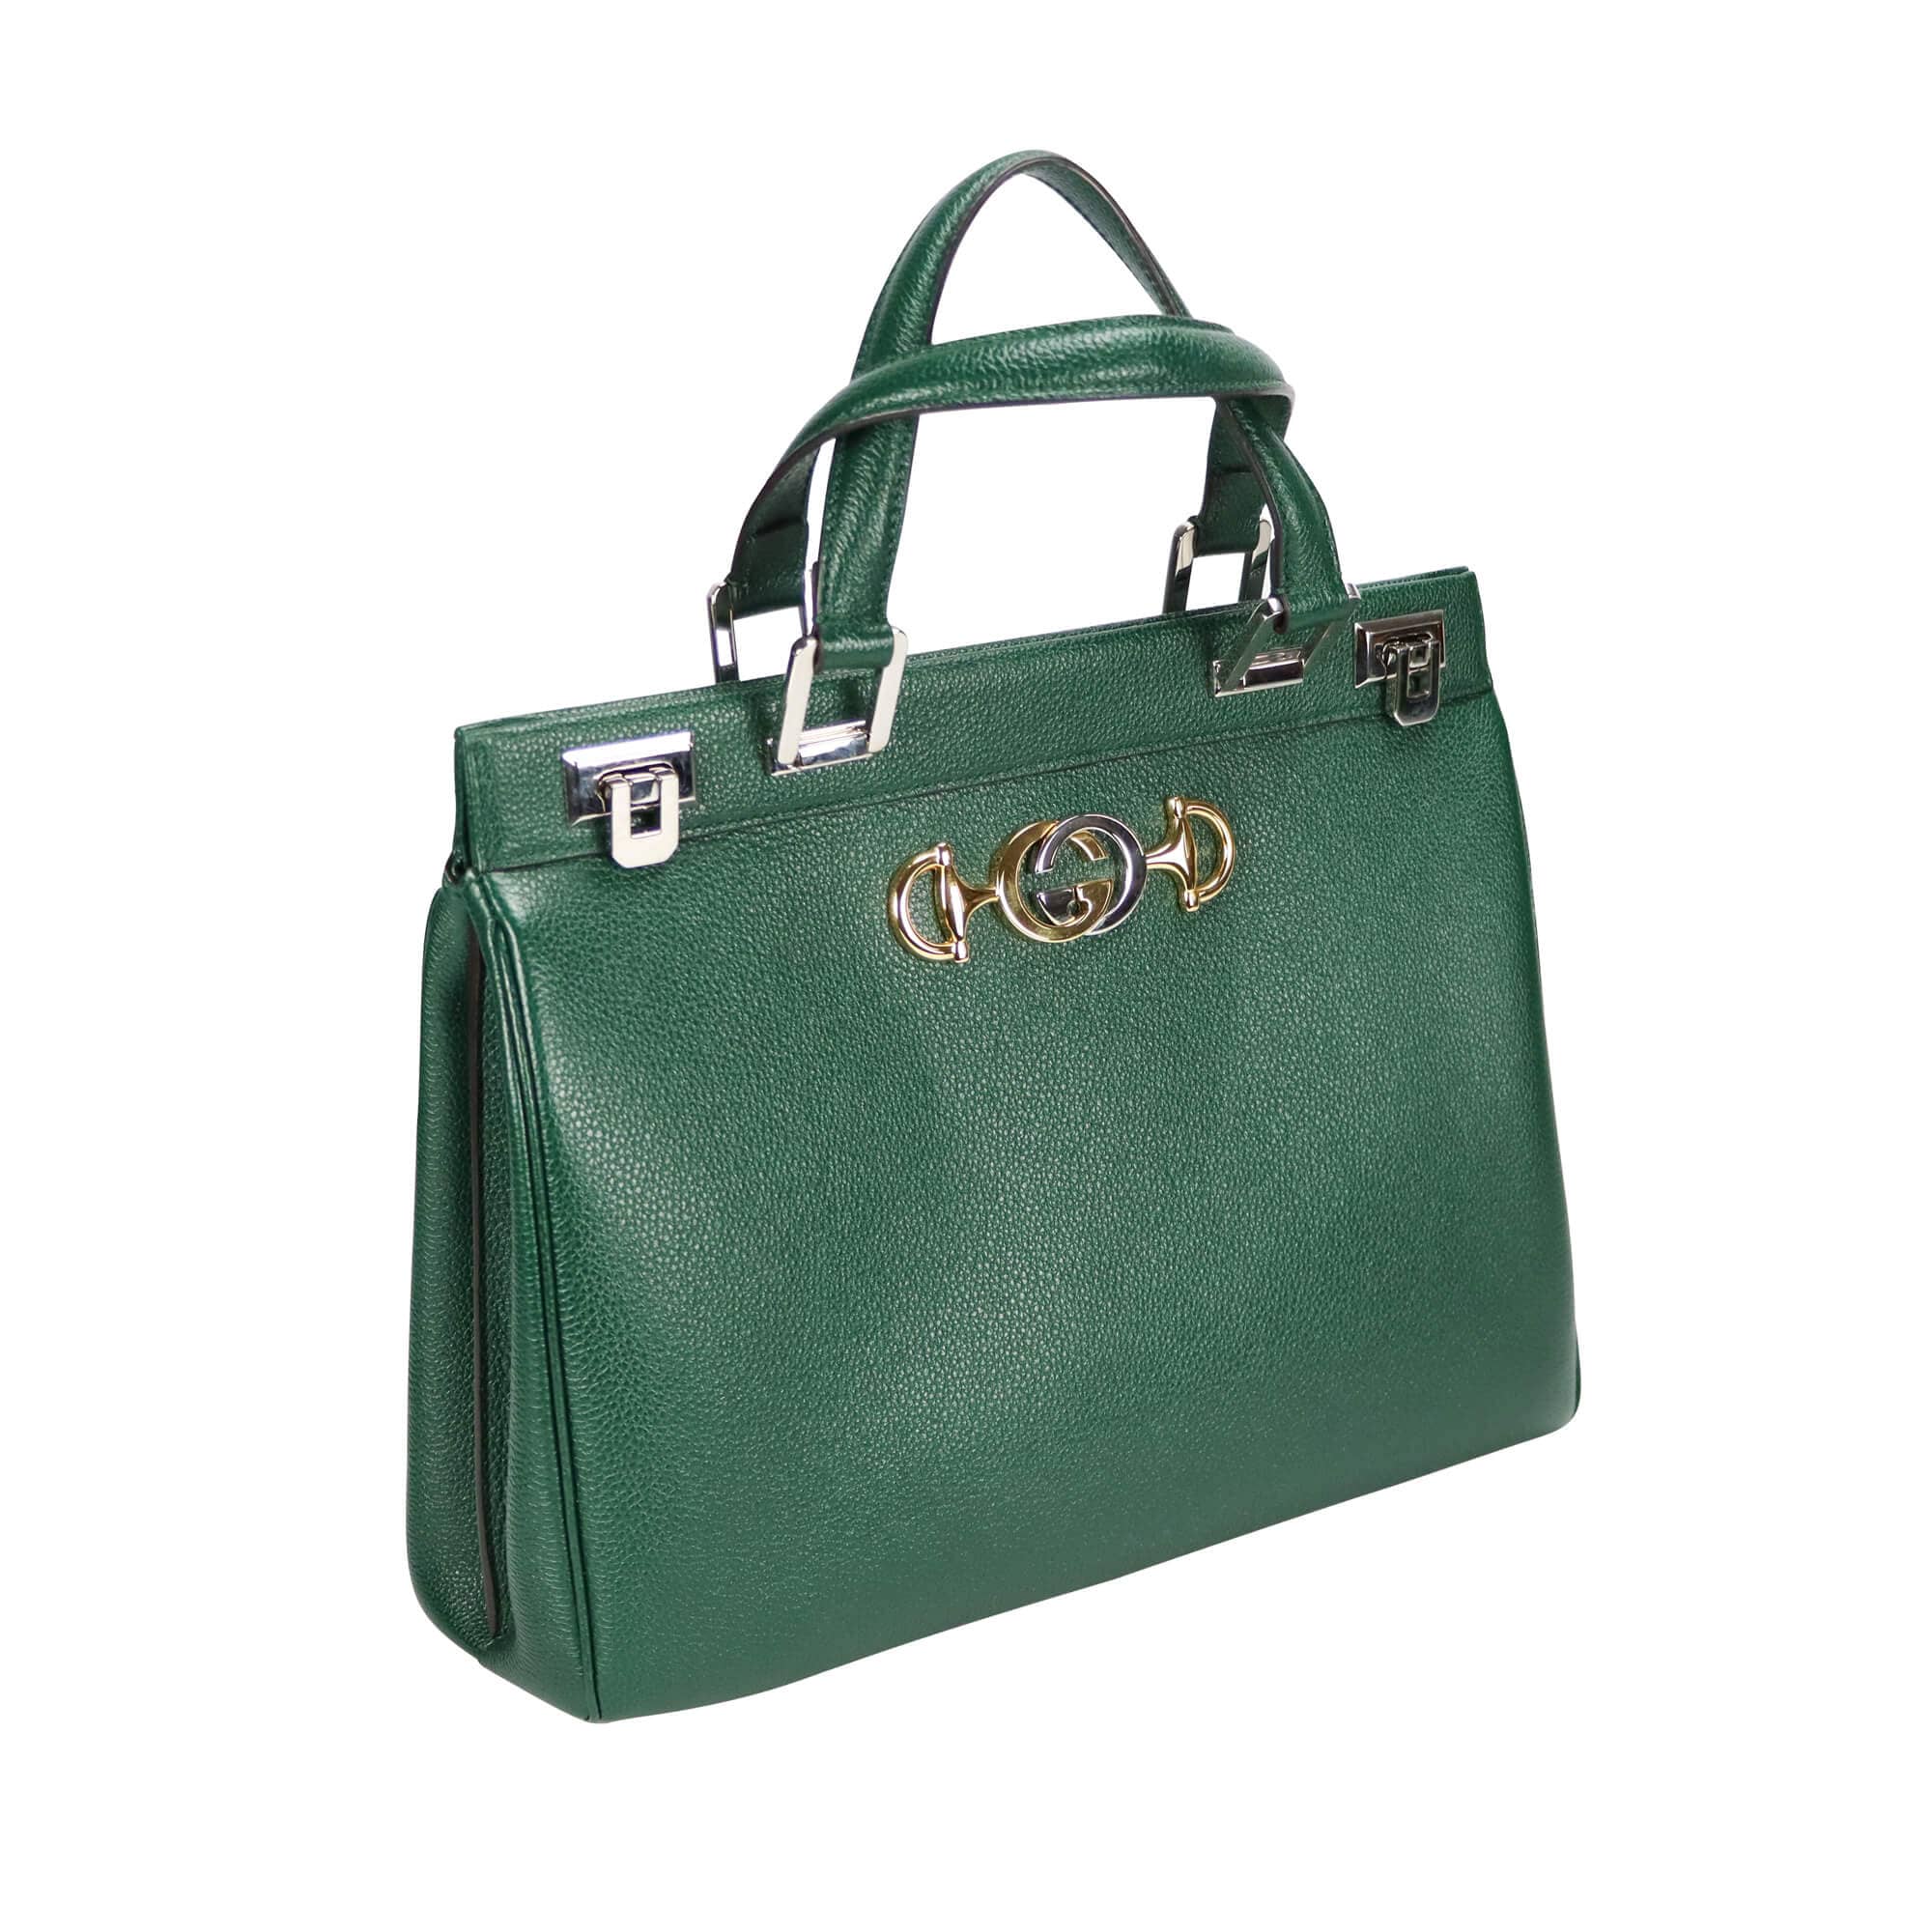 Zumi leather handbag Gucci Beige in Leather - 25699913